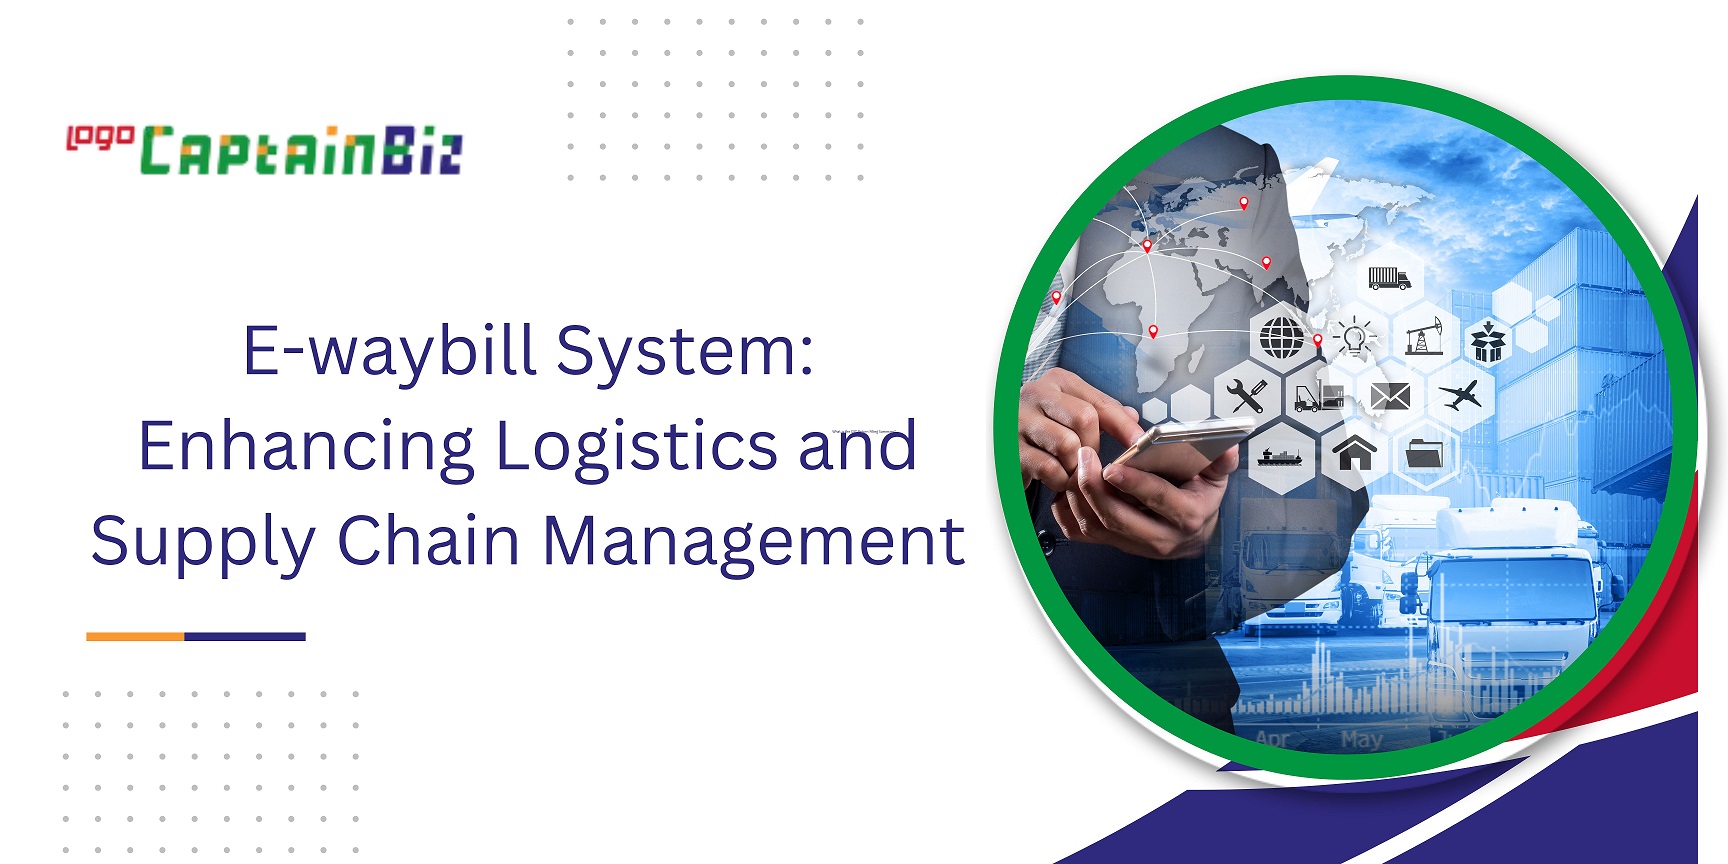 CaptainBiz: e-waybill system enhancing logistics and supply chain management